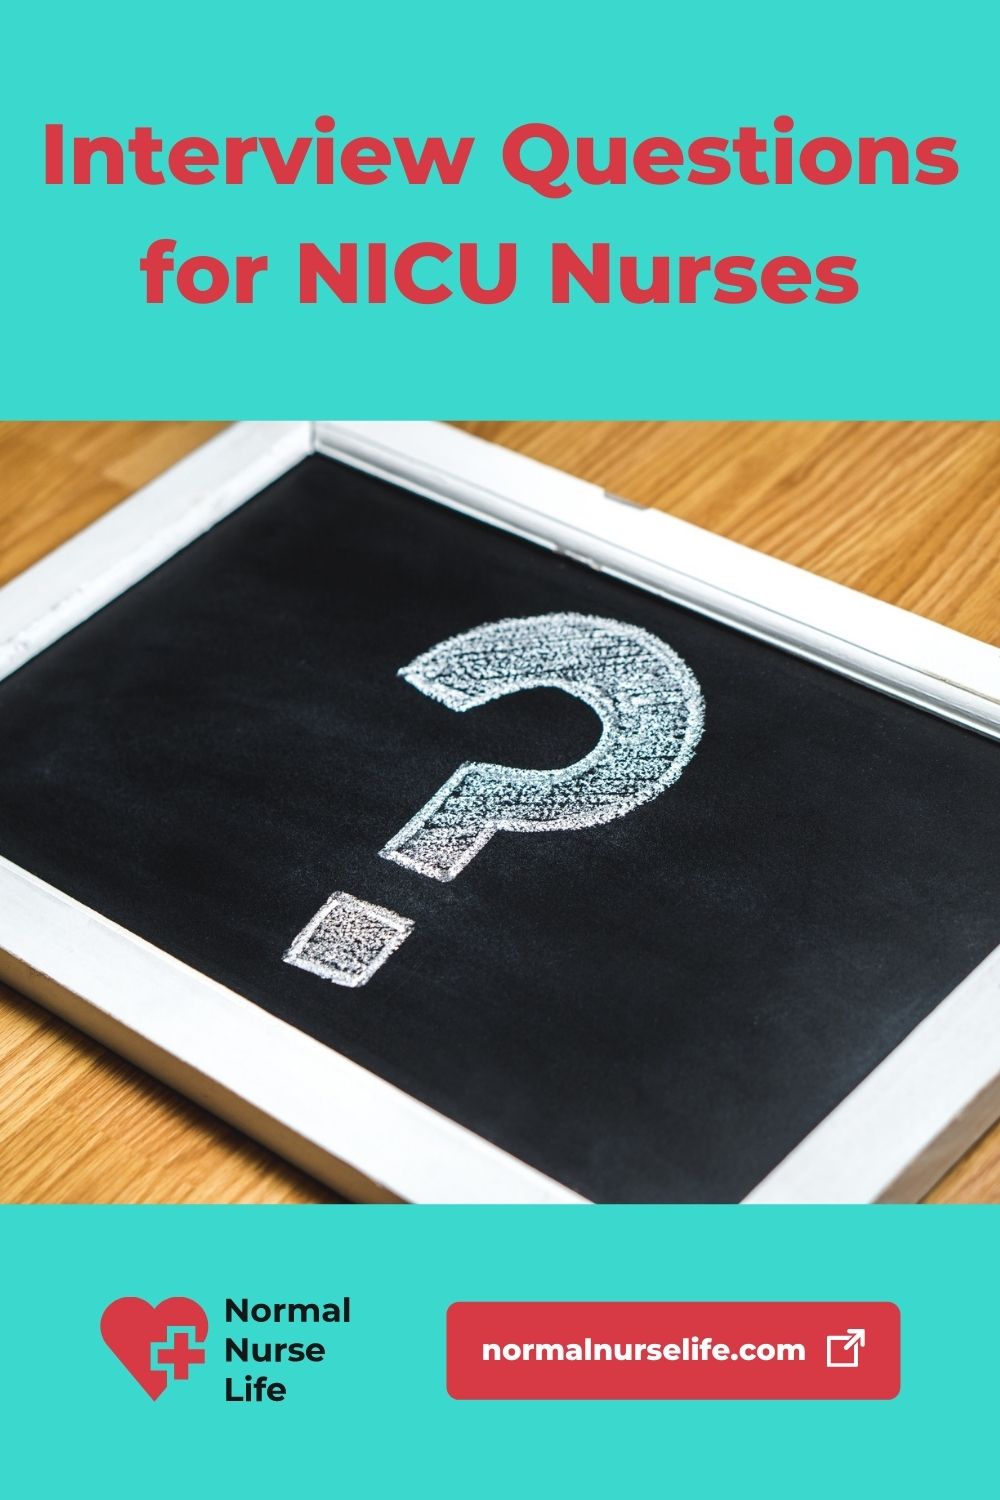 NICU nurse interview questions